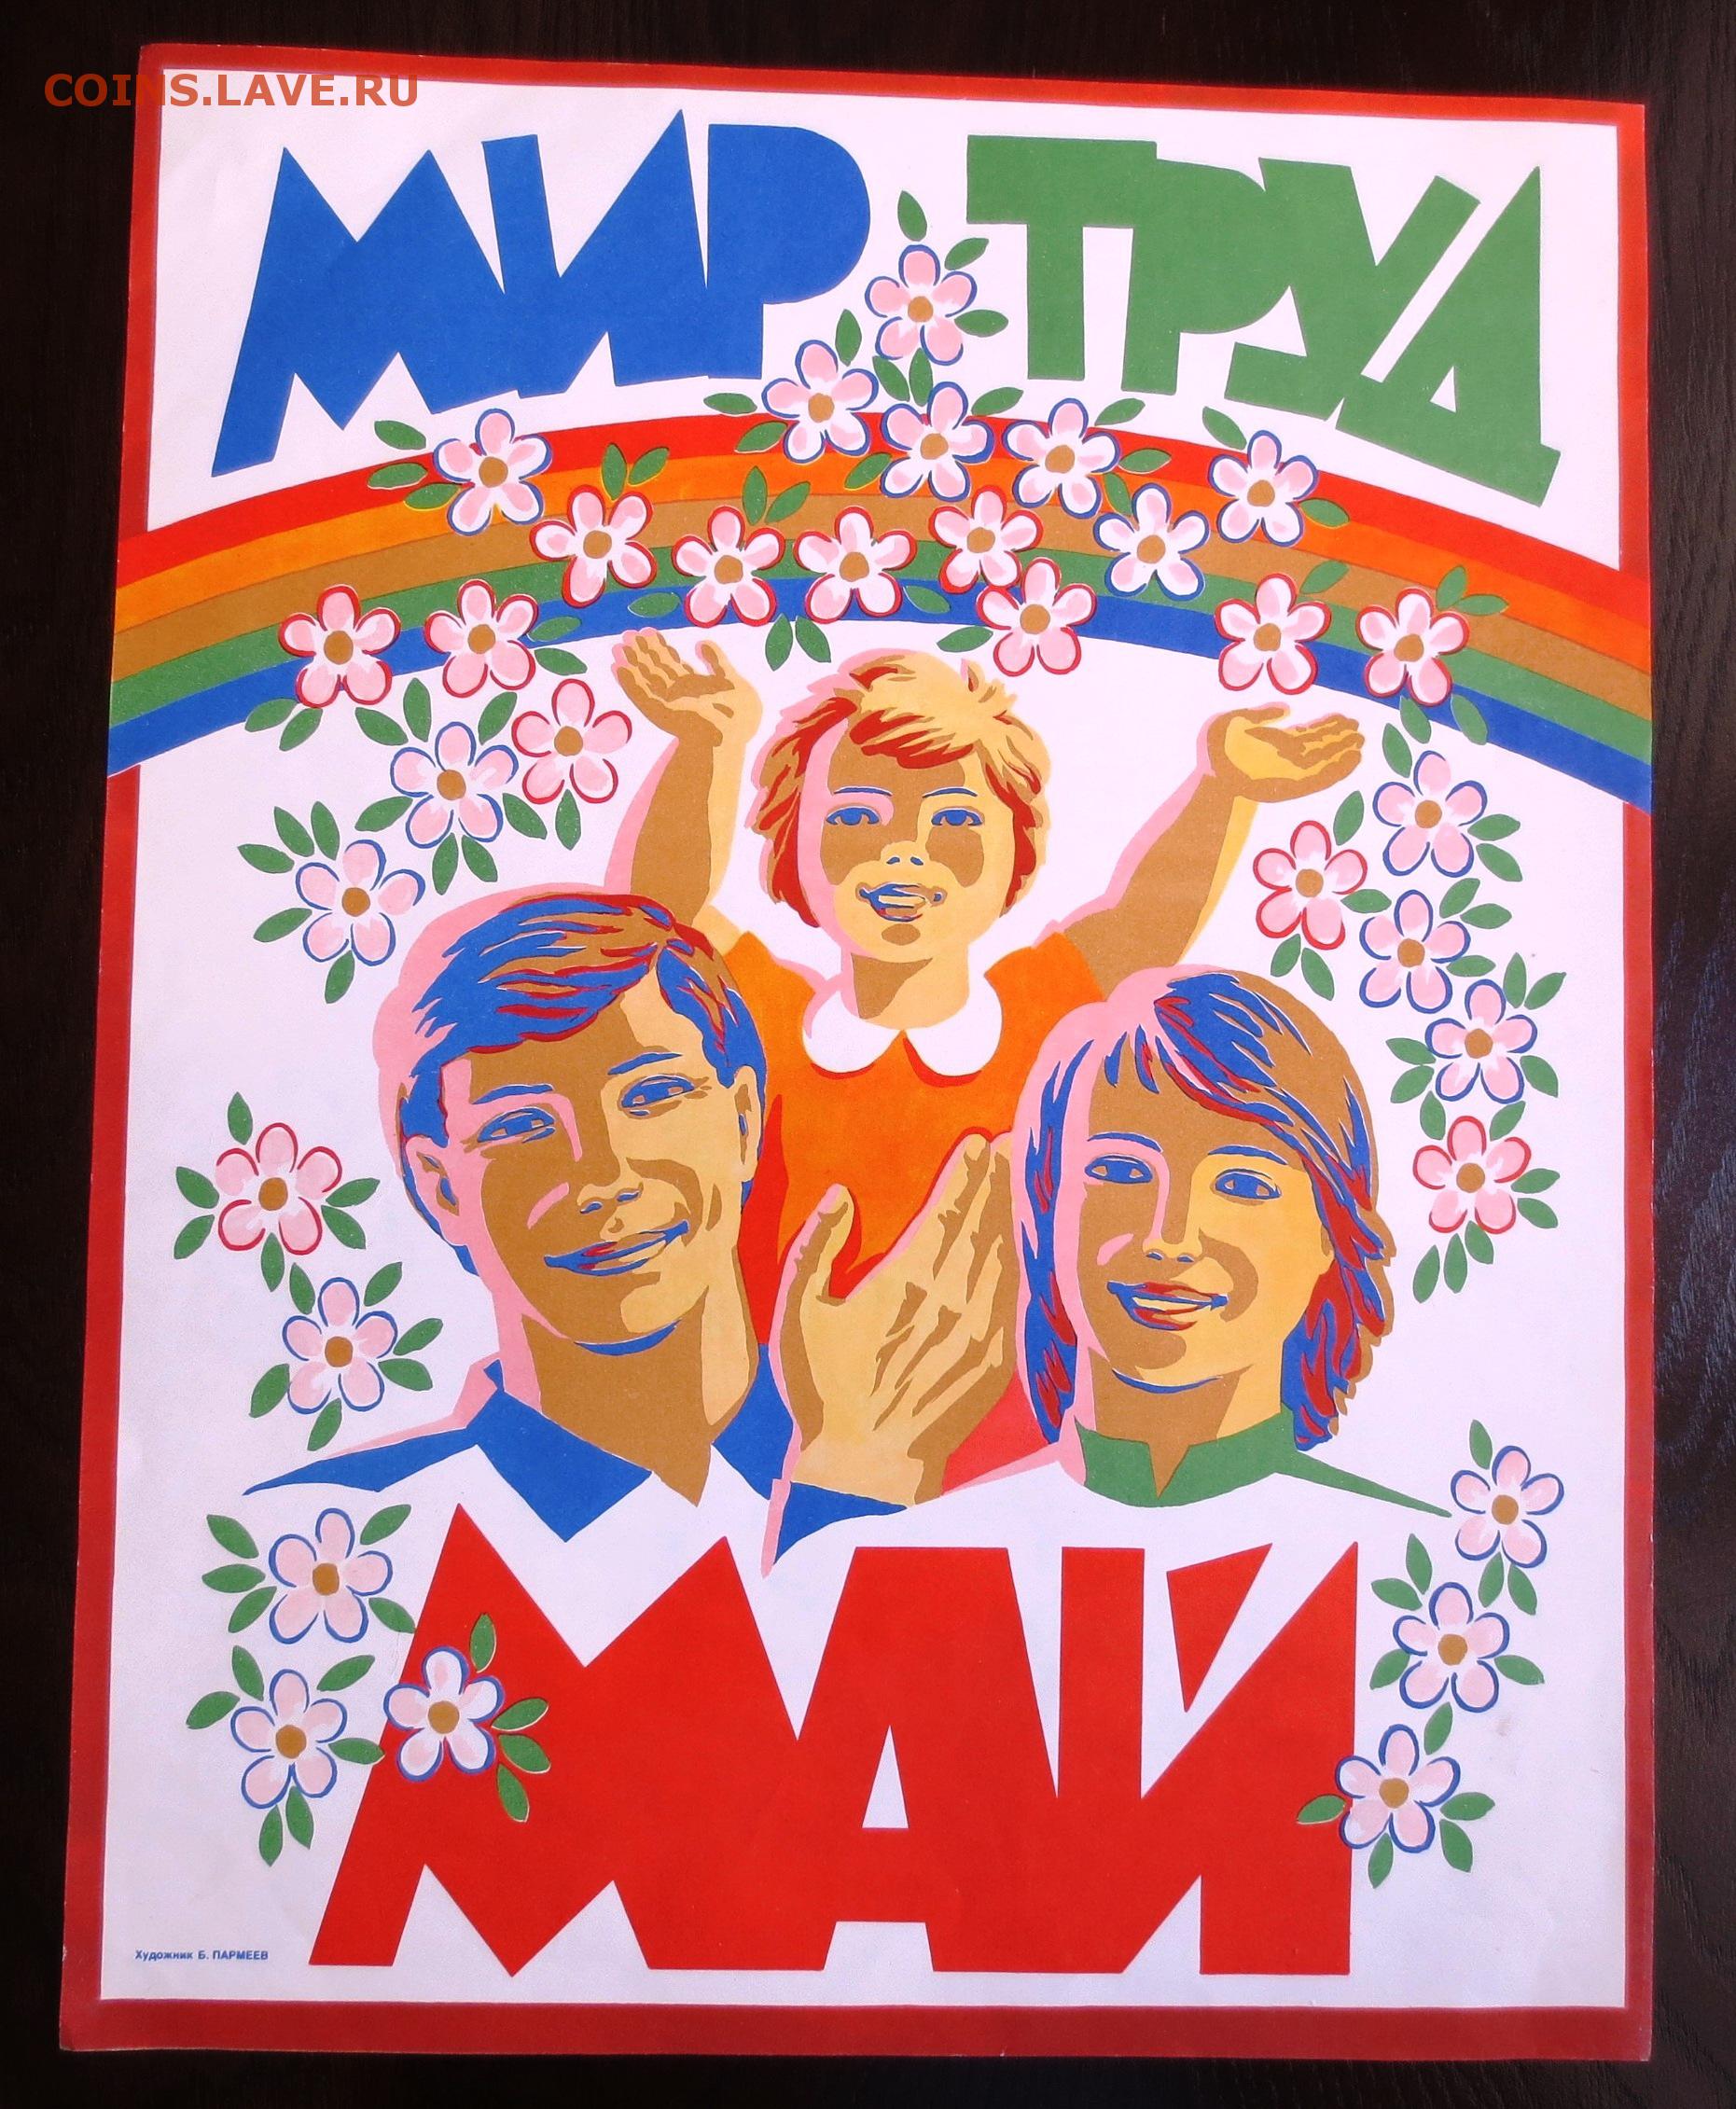 1 мая 80. 1 Мая плакат. Лозунги 90-х годов. Мир труд май лозунг. Плакаты 80-х годов.